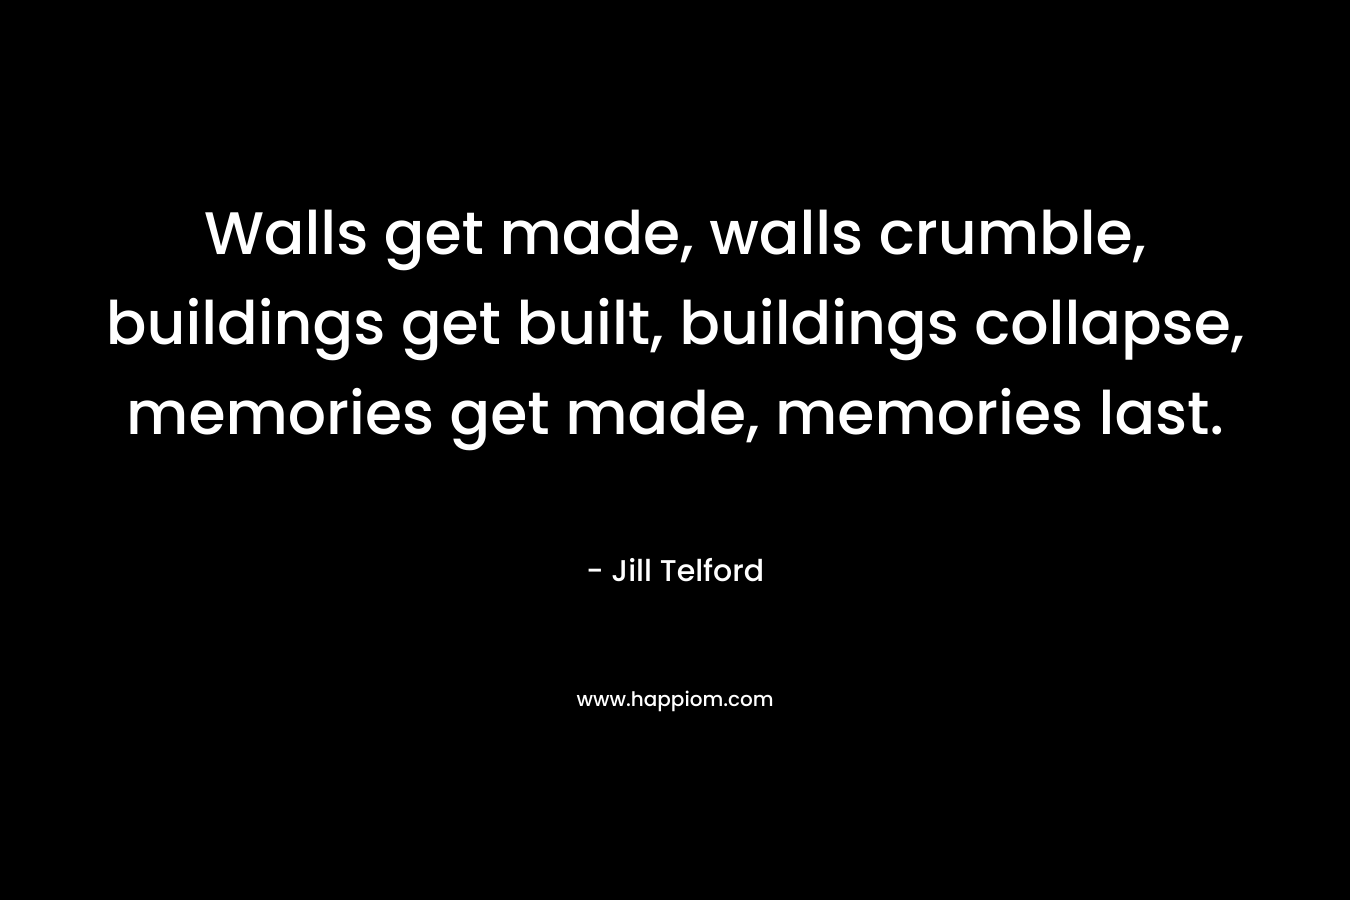 Walls get made, walls crumble, buildings get built, buildings collapse, memories get made, memories last. – Jill Telford